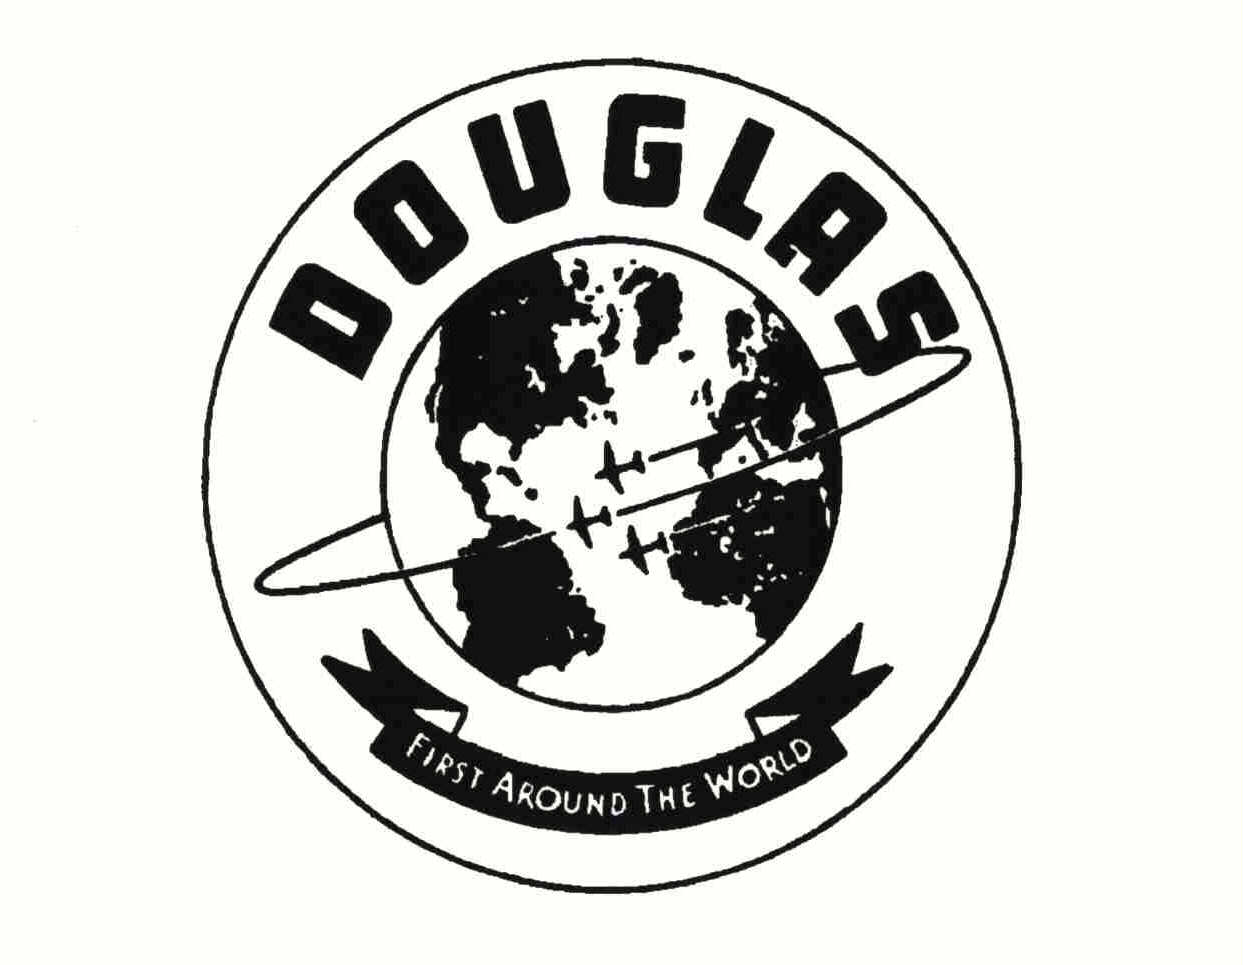  DOUGLAS FIRST AROUND THE WORLD